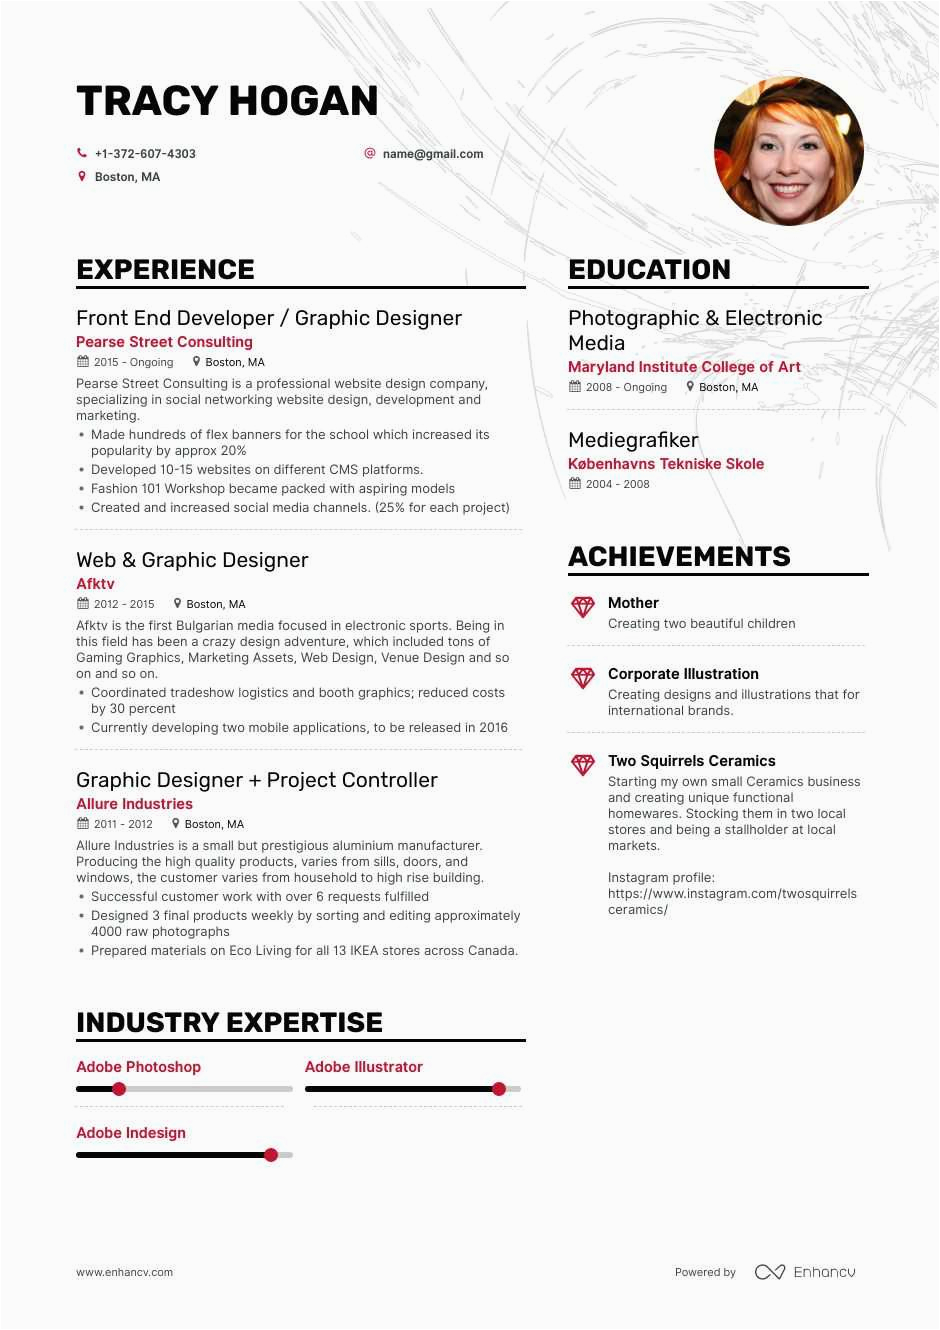 Sample Of Resume for Graphic Designer 8 Freelance Graphic Designer Resume Samples and Writing Guide